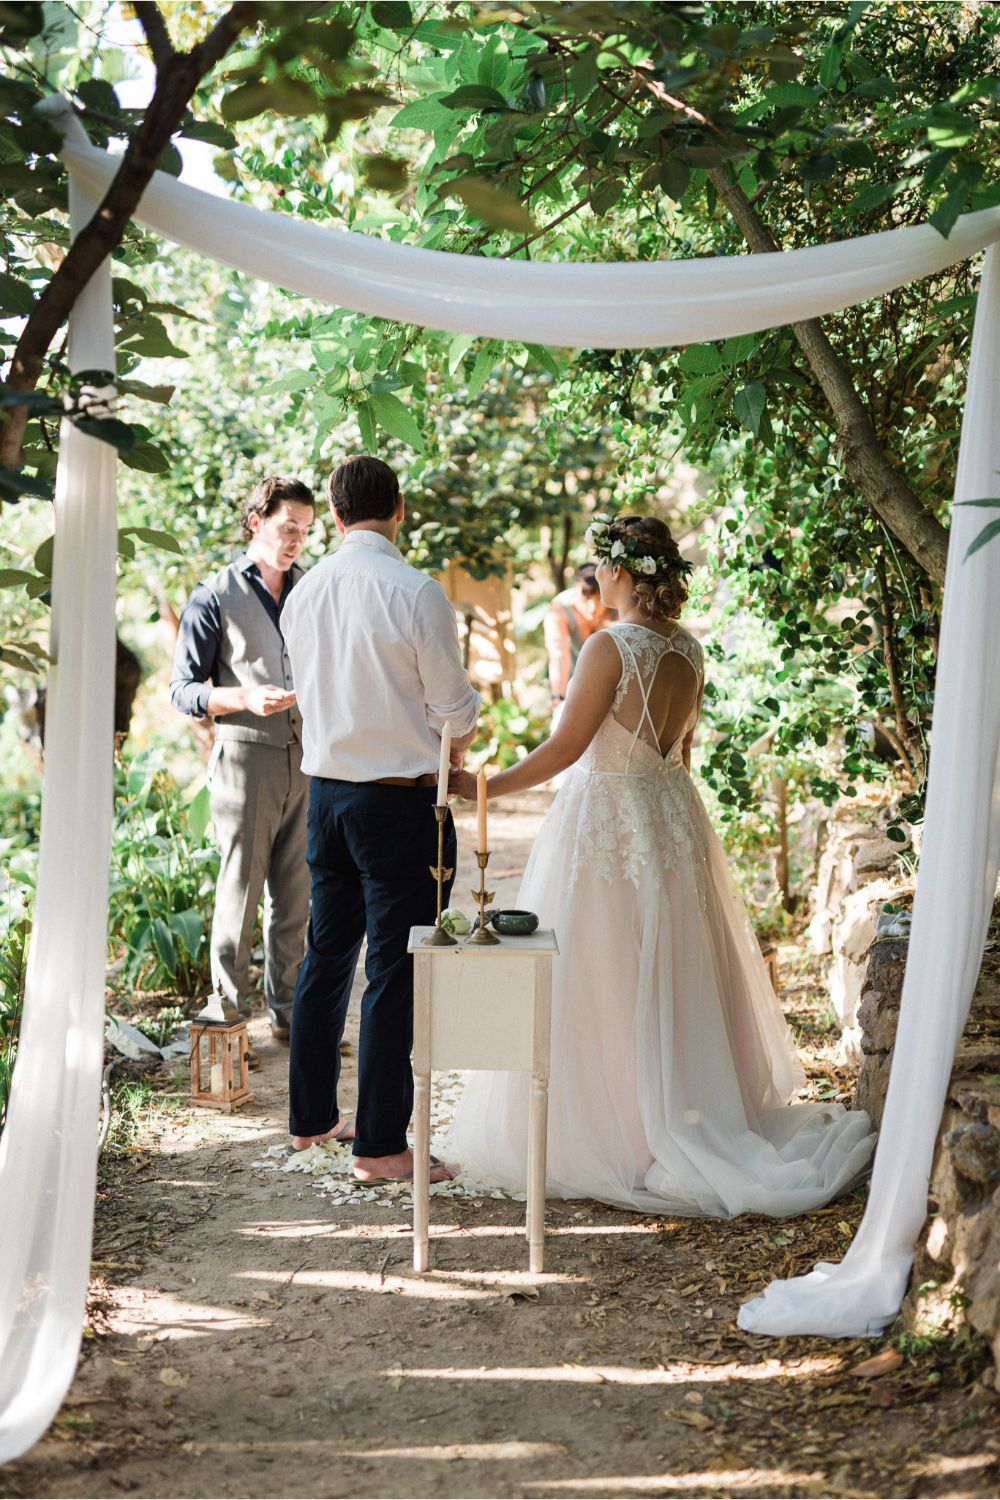 ceremony setup at garden elopement in Crete